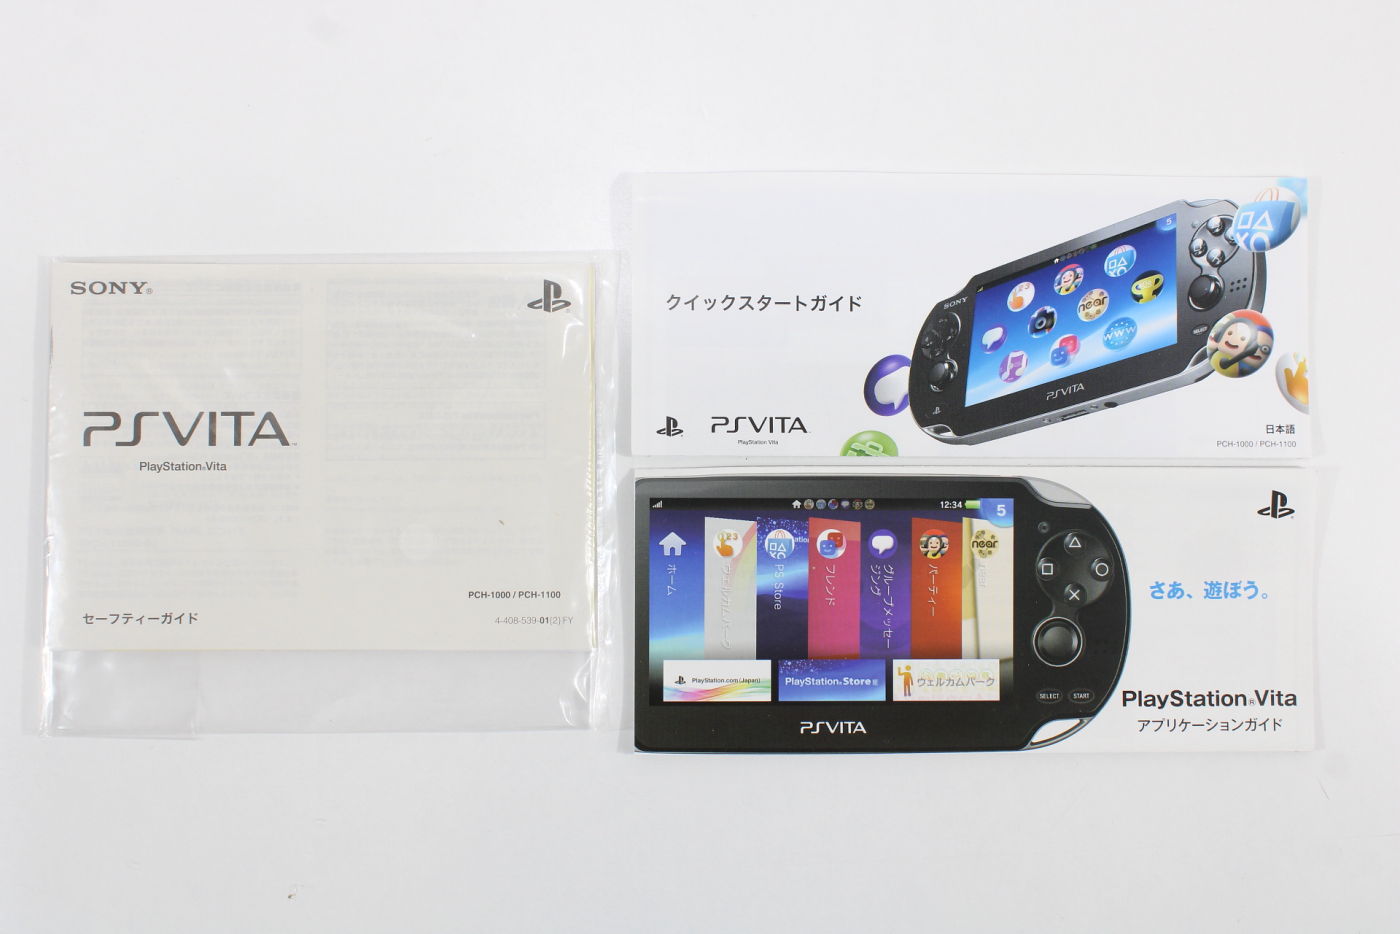 Sony PS Vita Console PCH-1100 OLED Wi-Fi 3G Model PlayStation